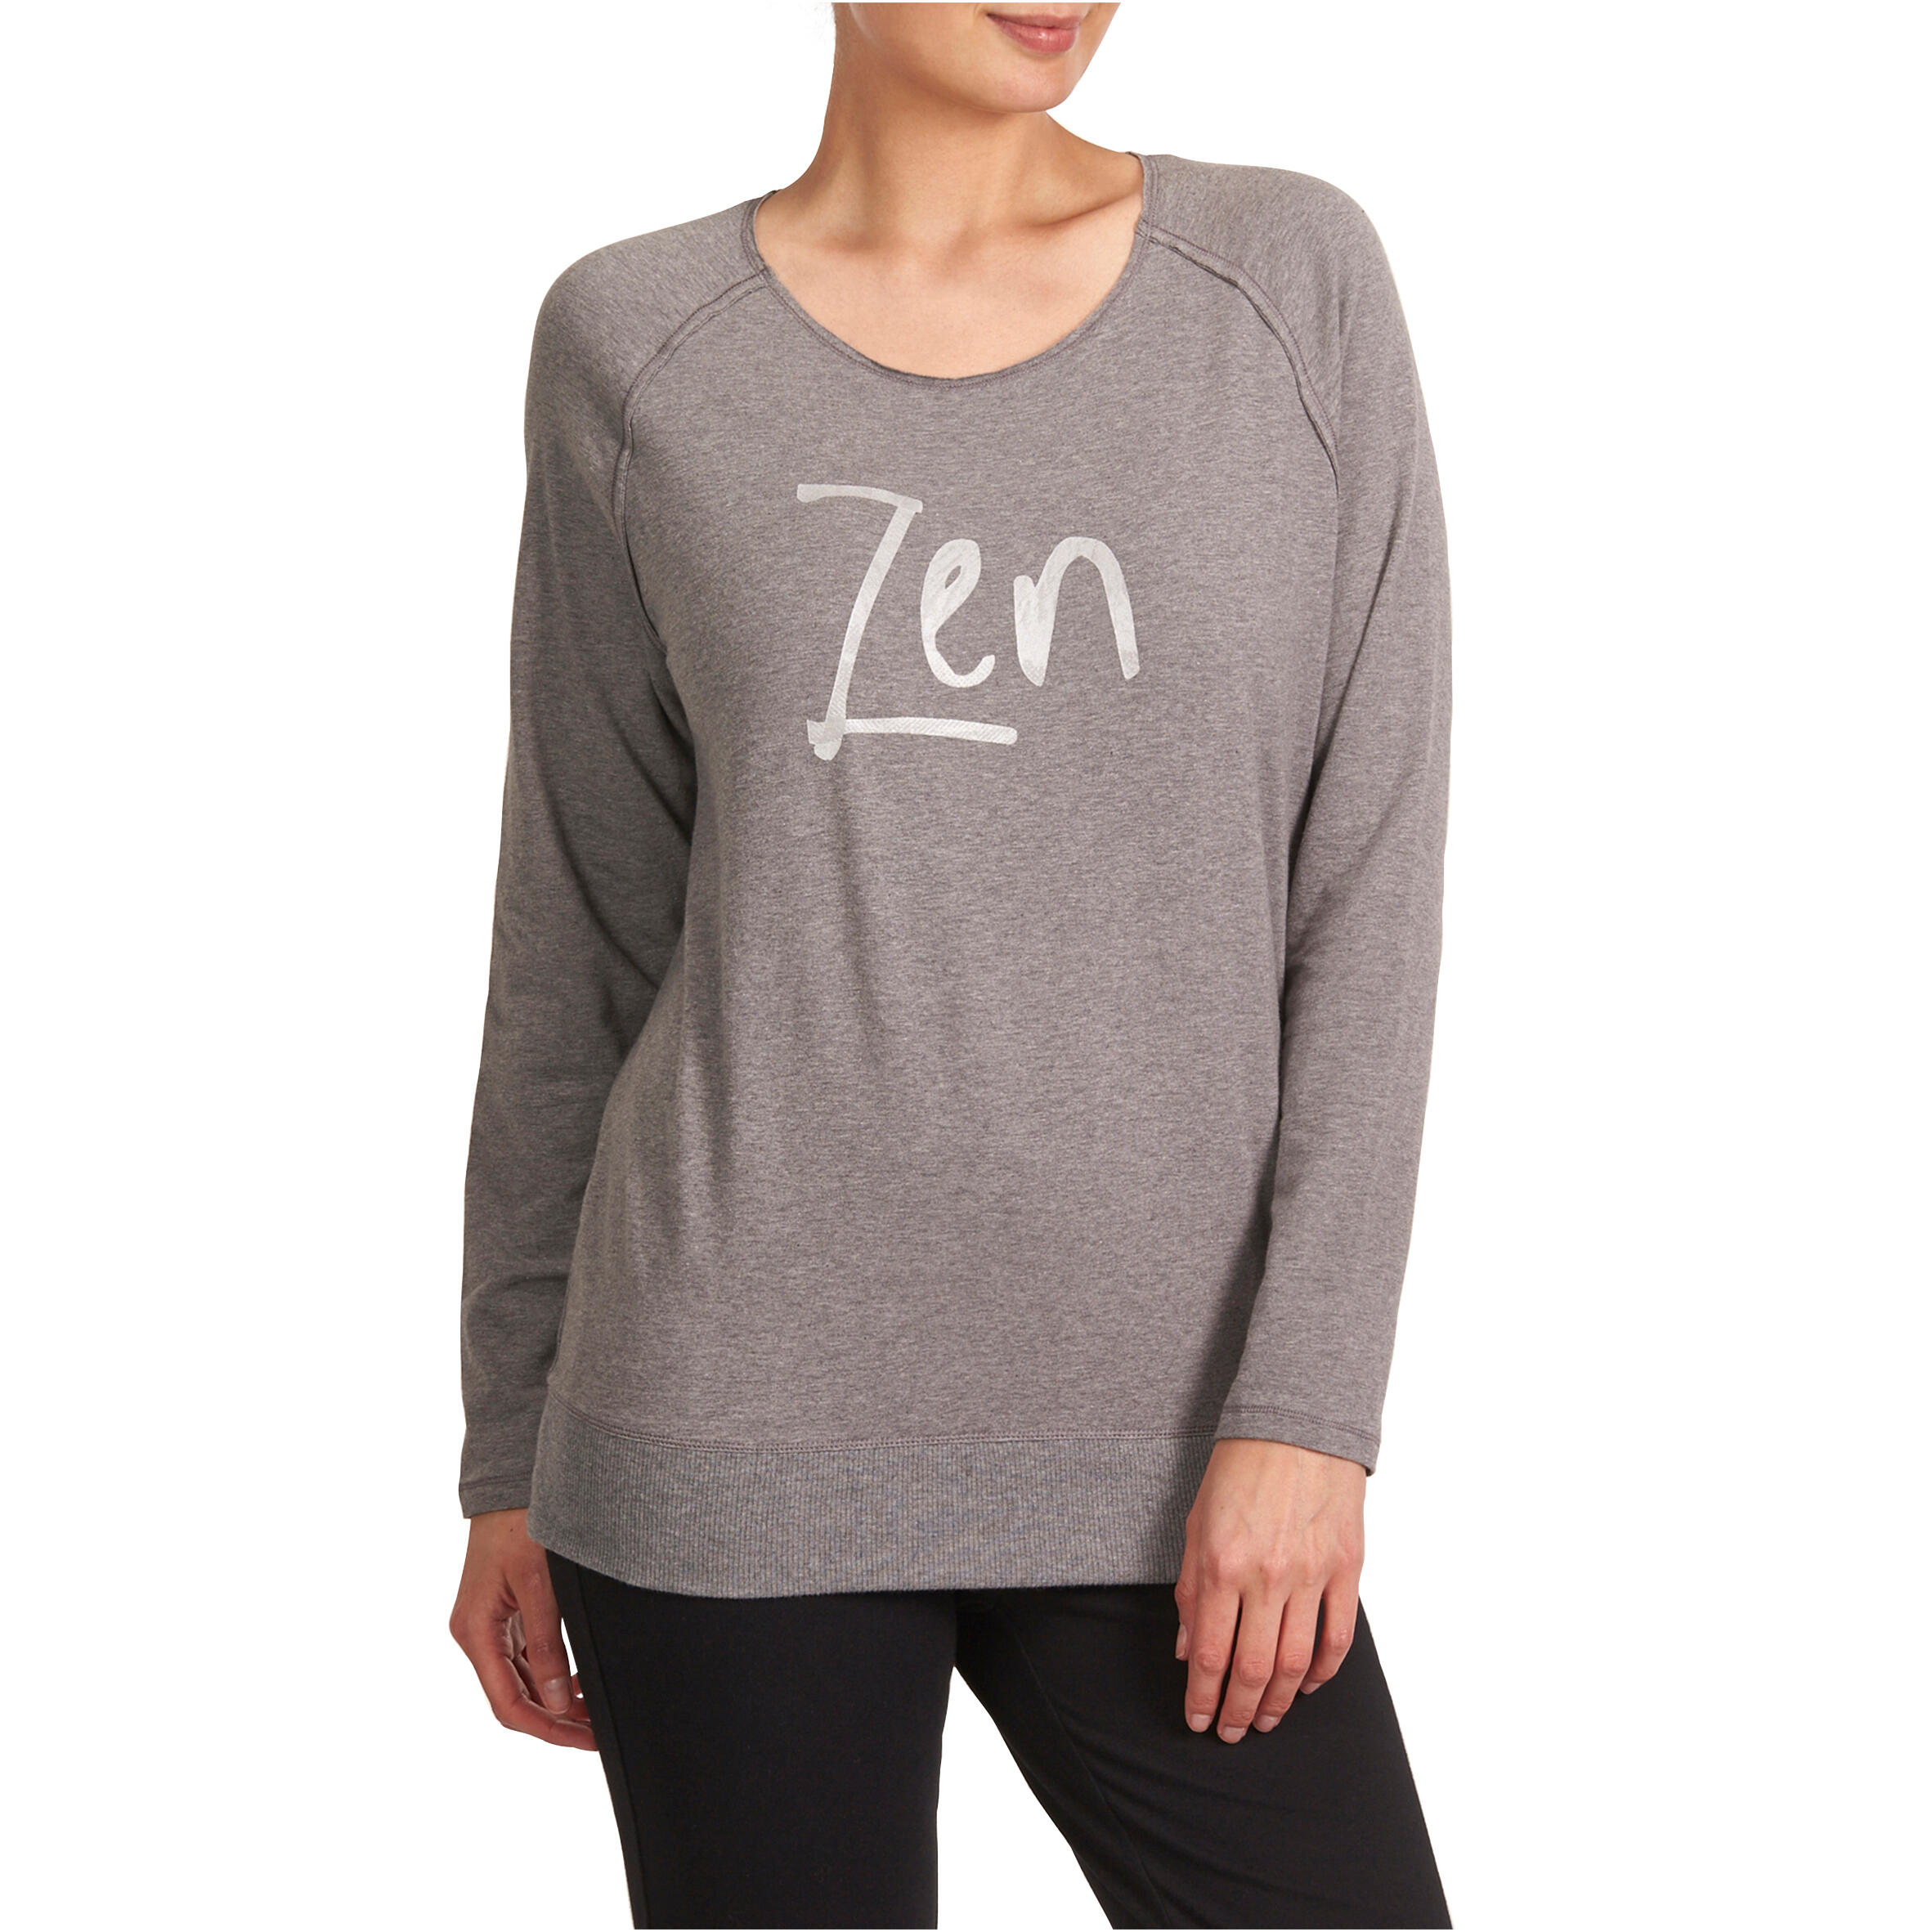 Women's Organic Cotton Long-Sleeved Yoga T-Shirt - Mottled Grey 2/12